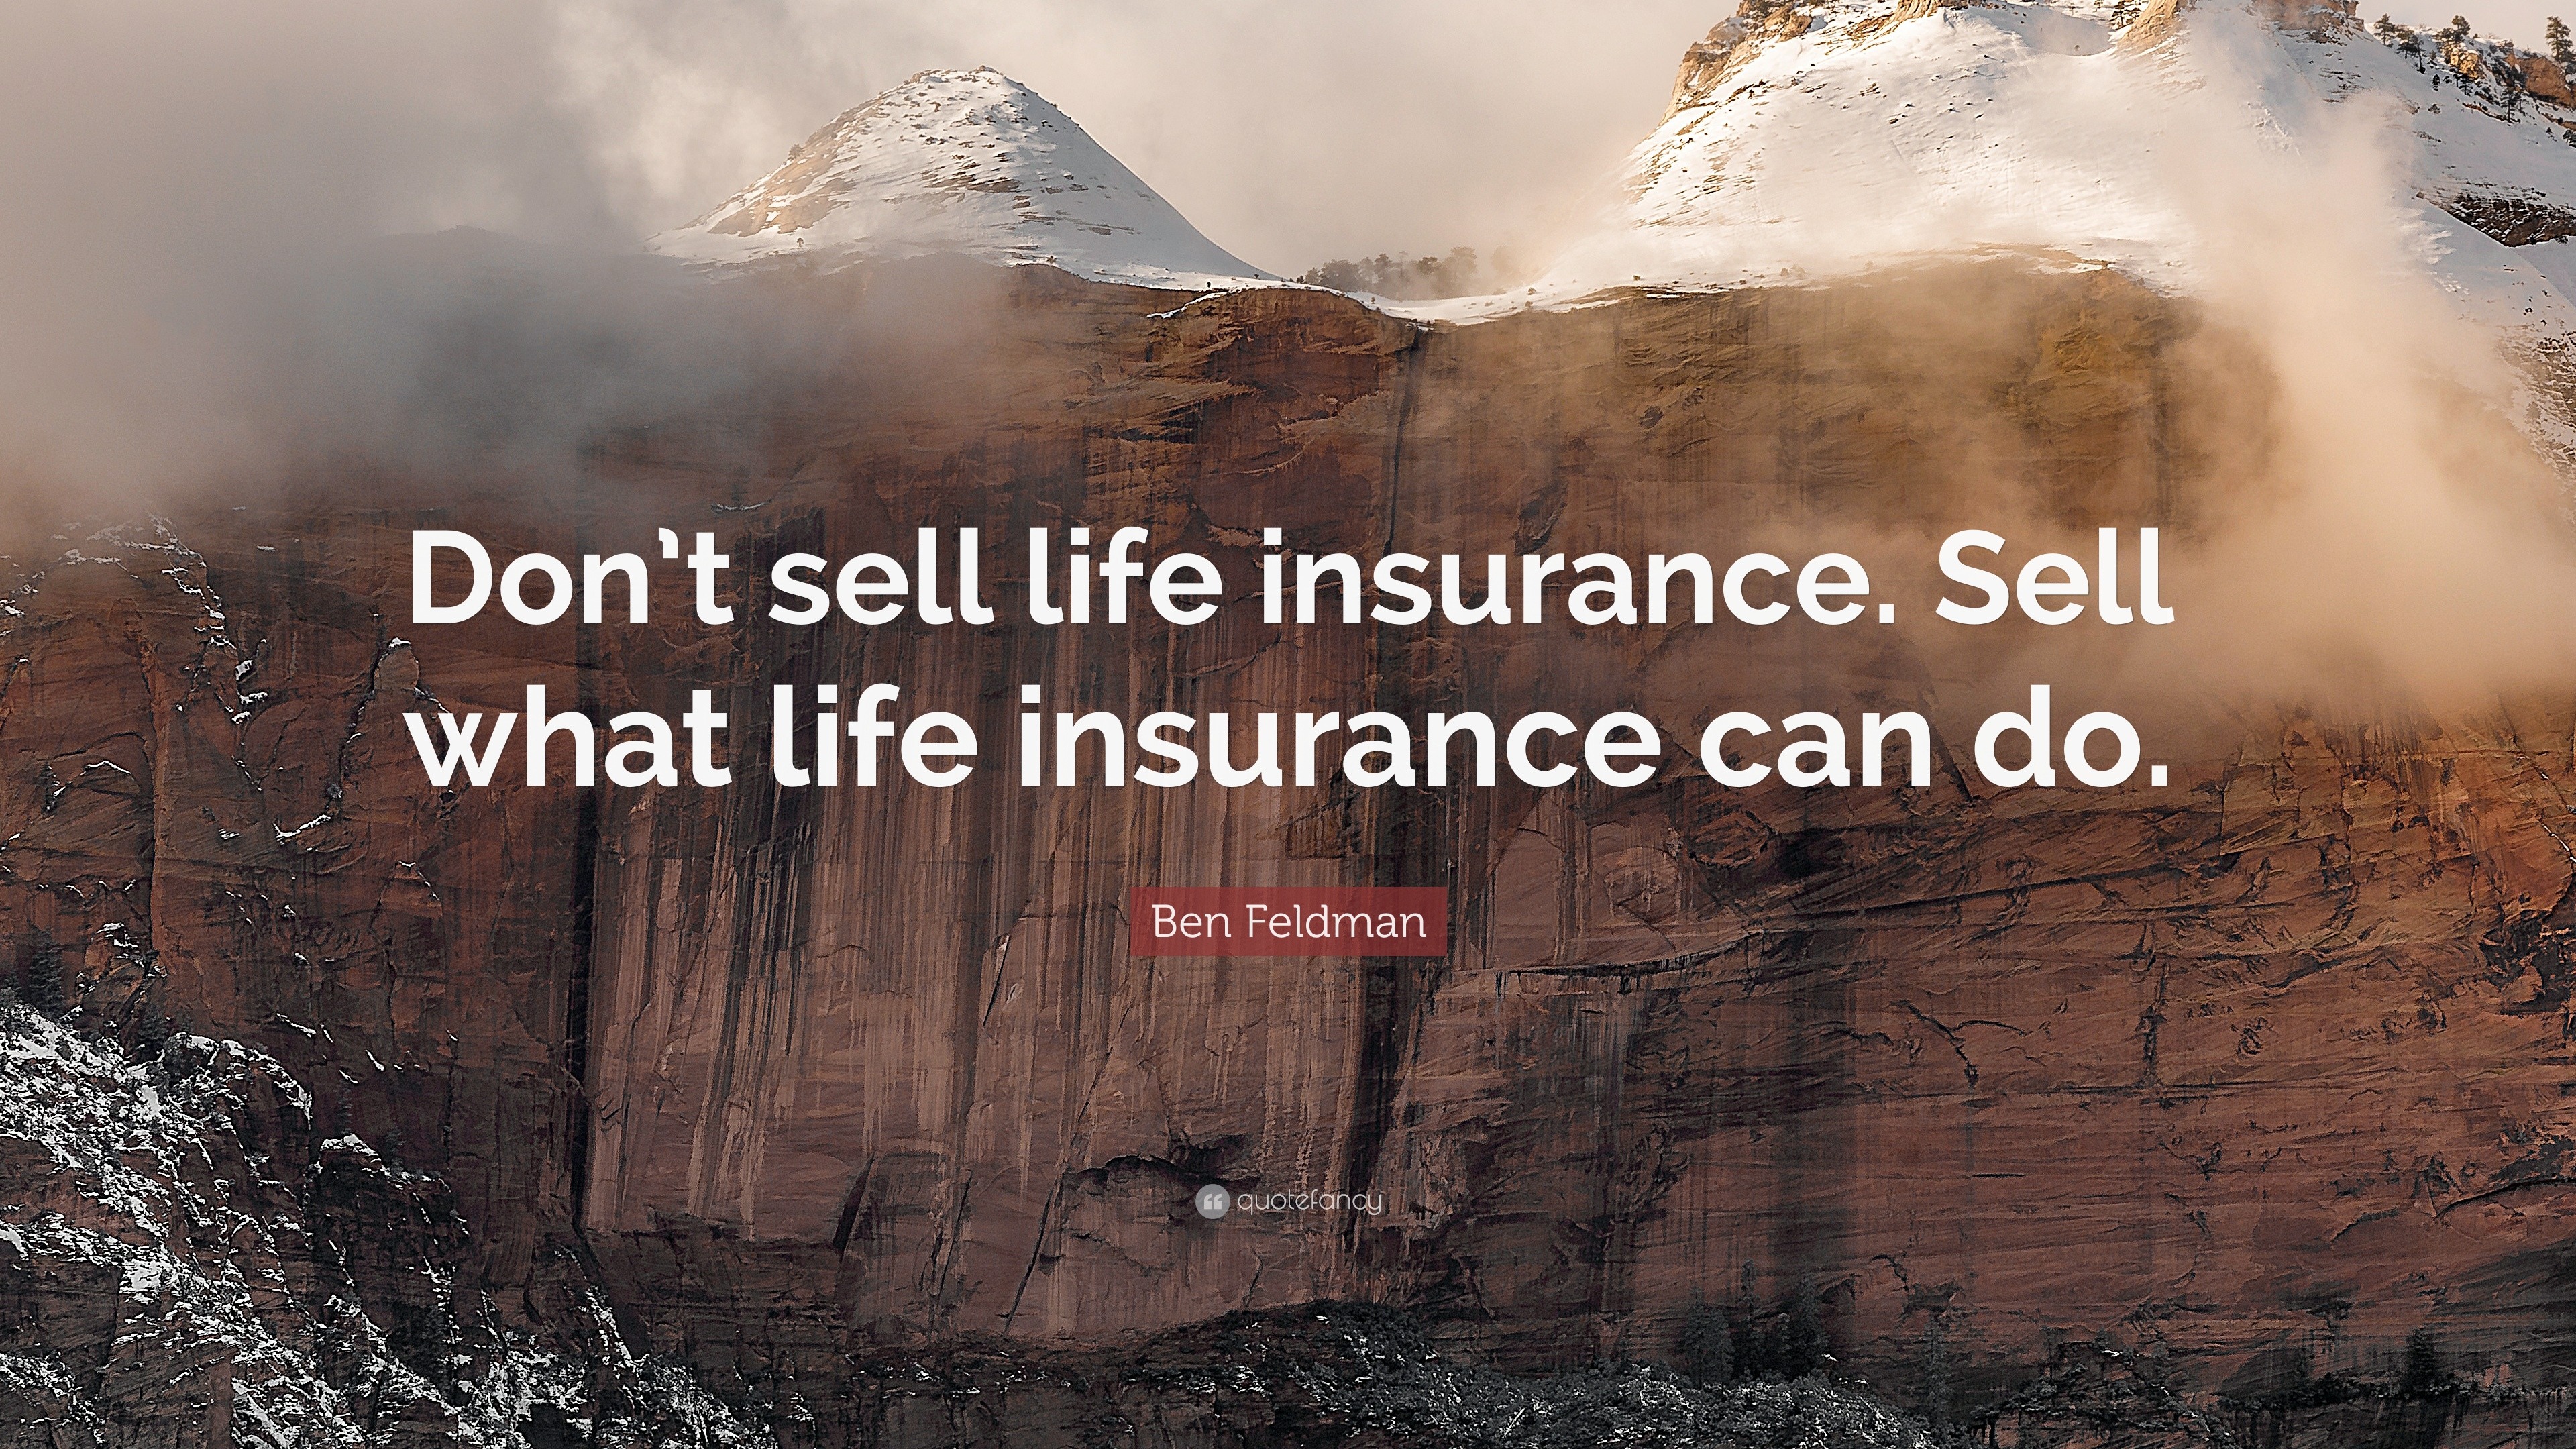 Ben Feldman Quote “Don t sell life insurance Sell what life insurance